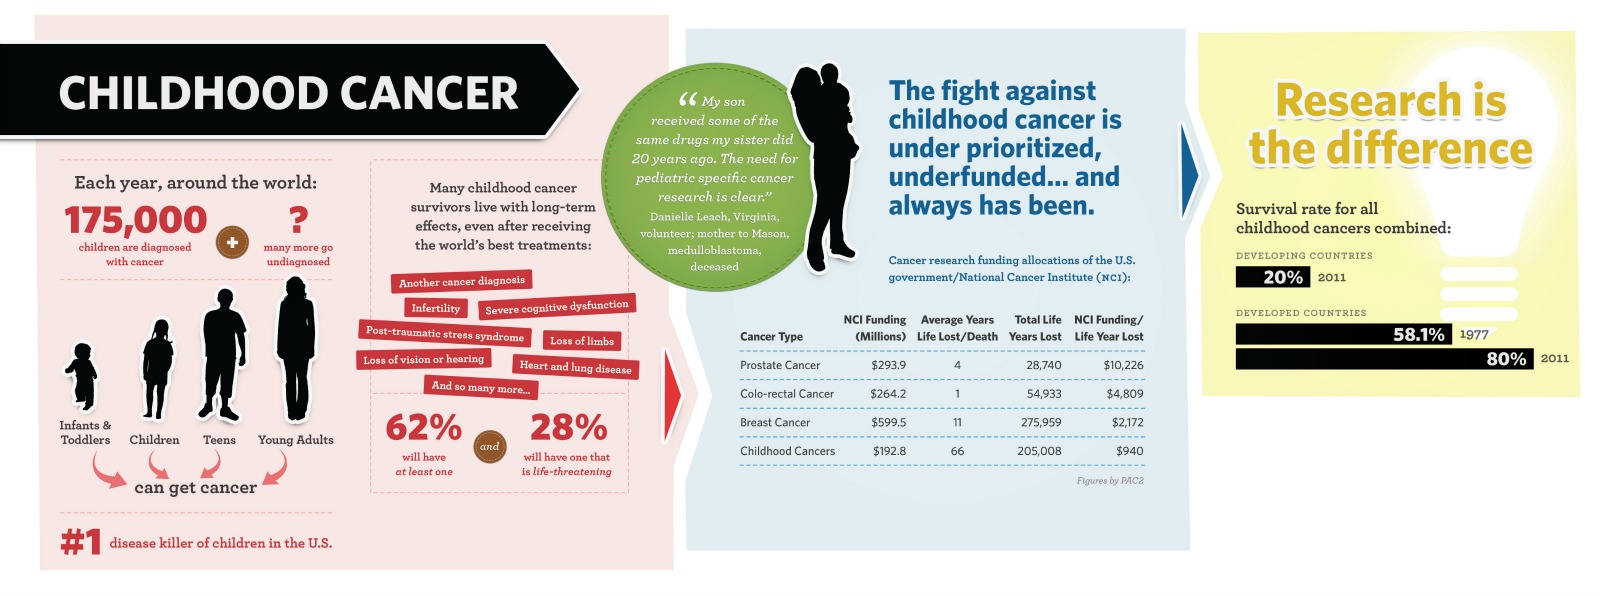 SBF_childhoodcancer-infographic_SU2C-1600px.jpg